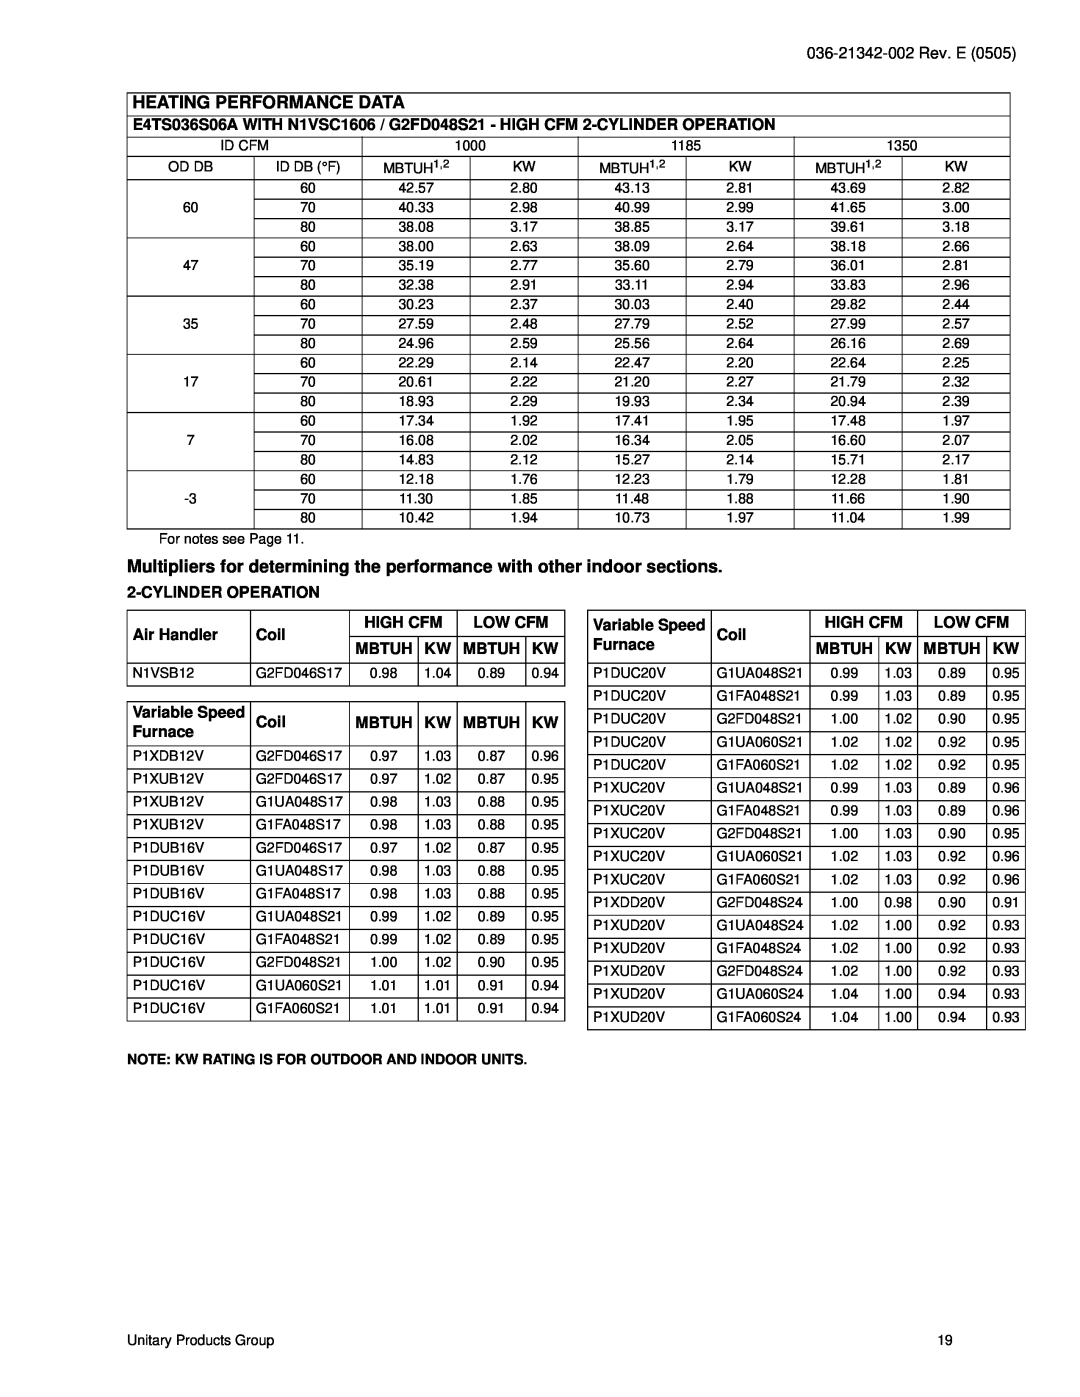 York E4TS030 THRU 060 warranty Heating Performance Data, Id Cfm 